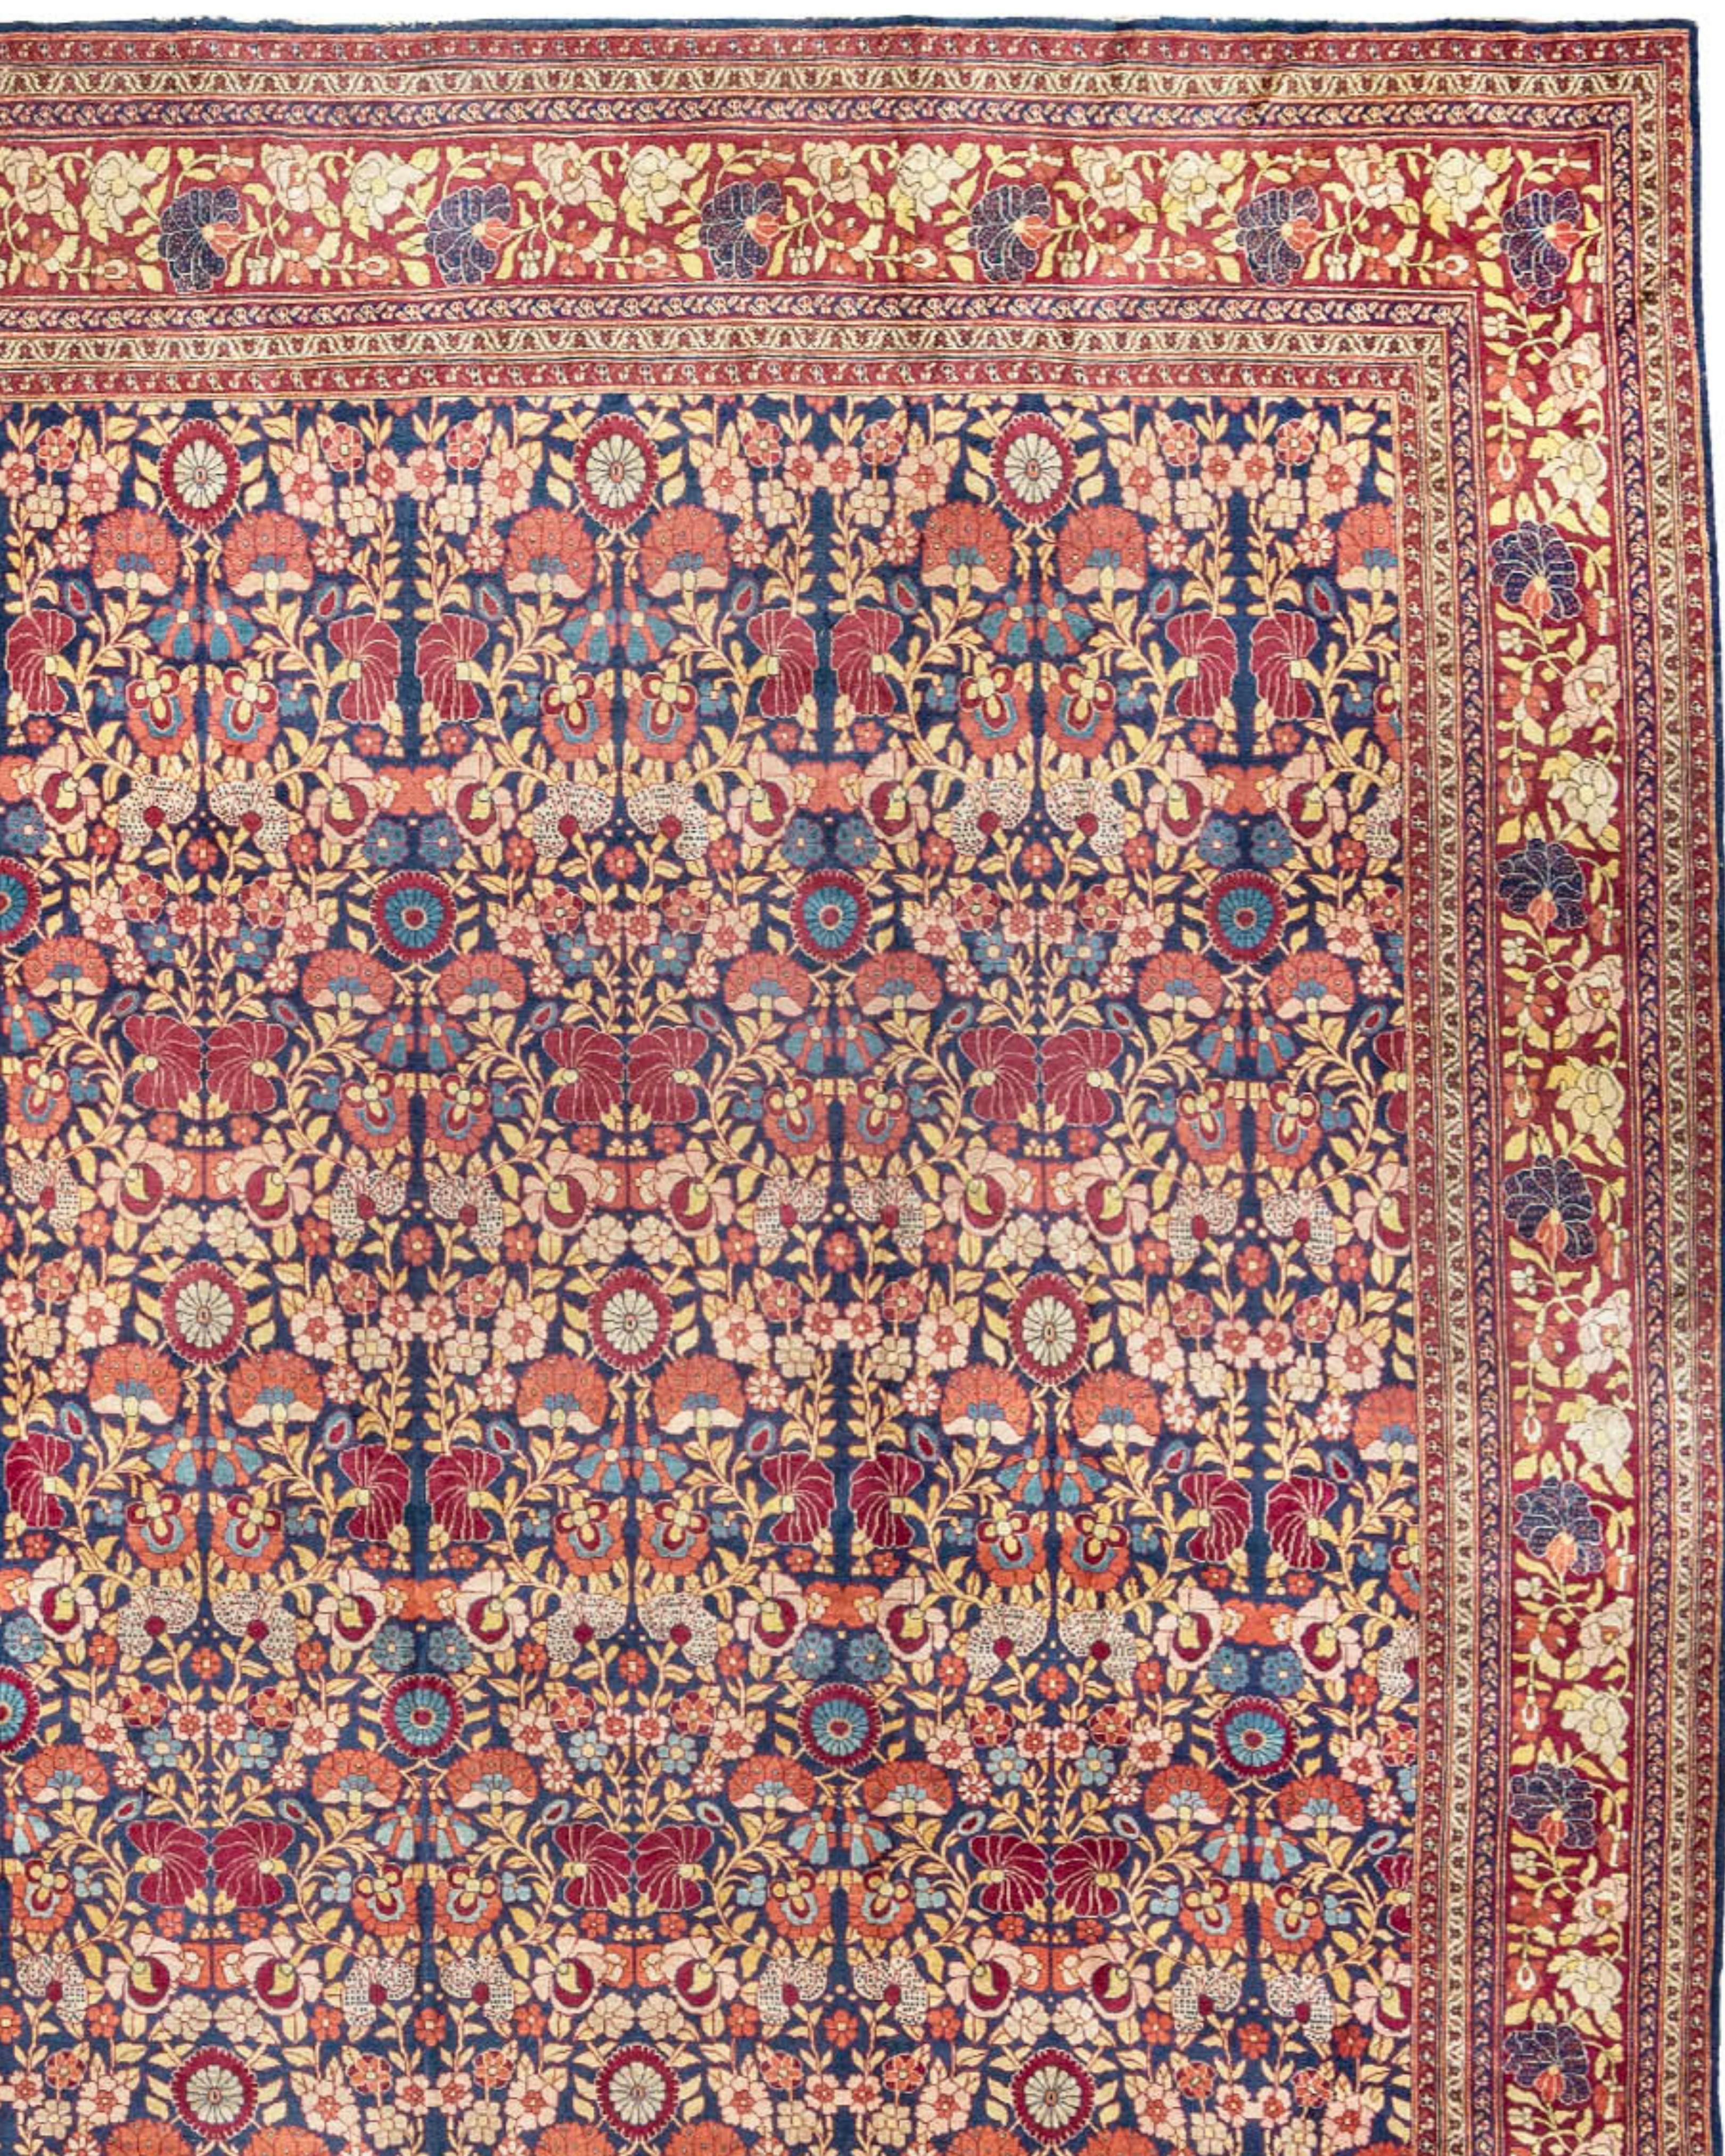 19th Century Antique Large Oversized Persian Mashad Carpet, c. 1900 For Sale